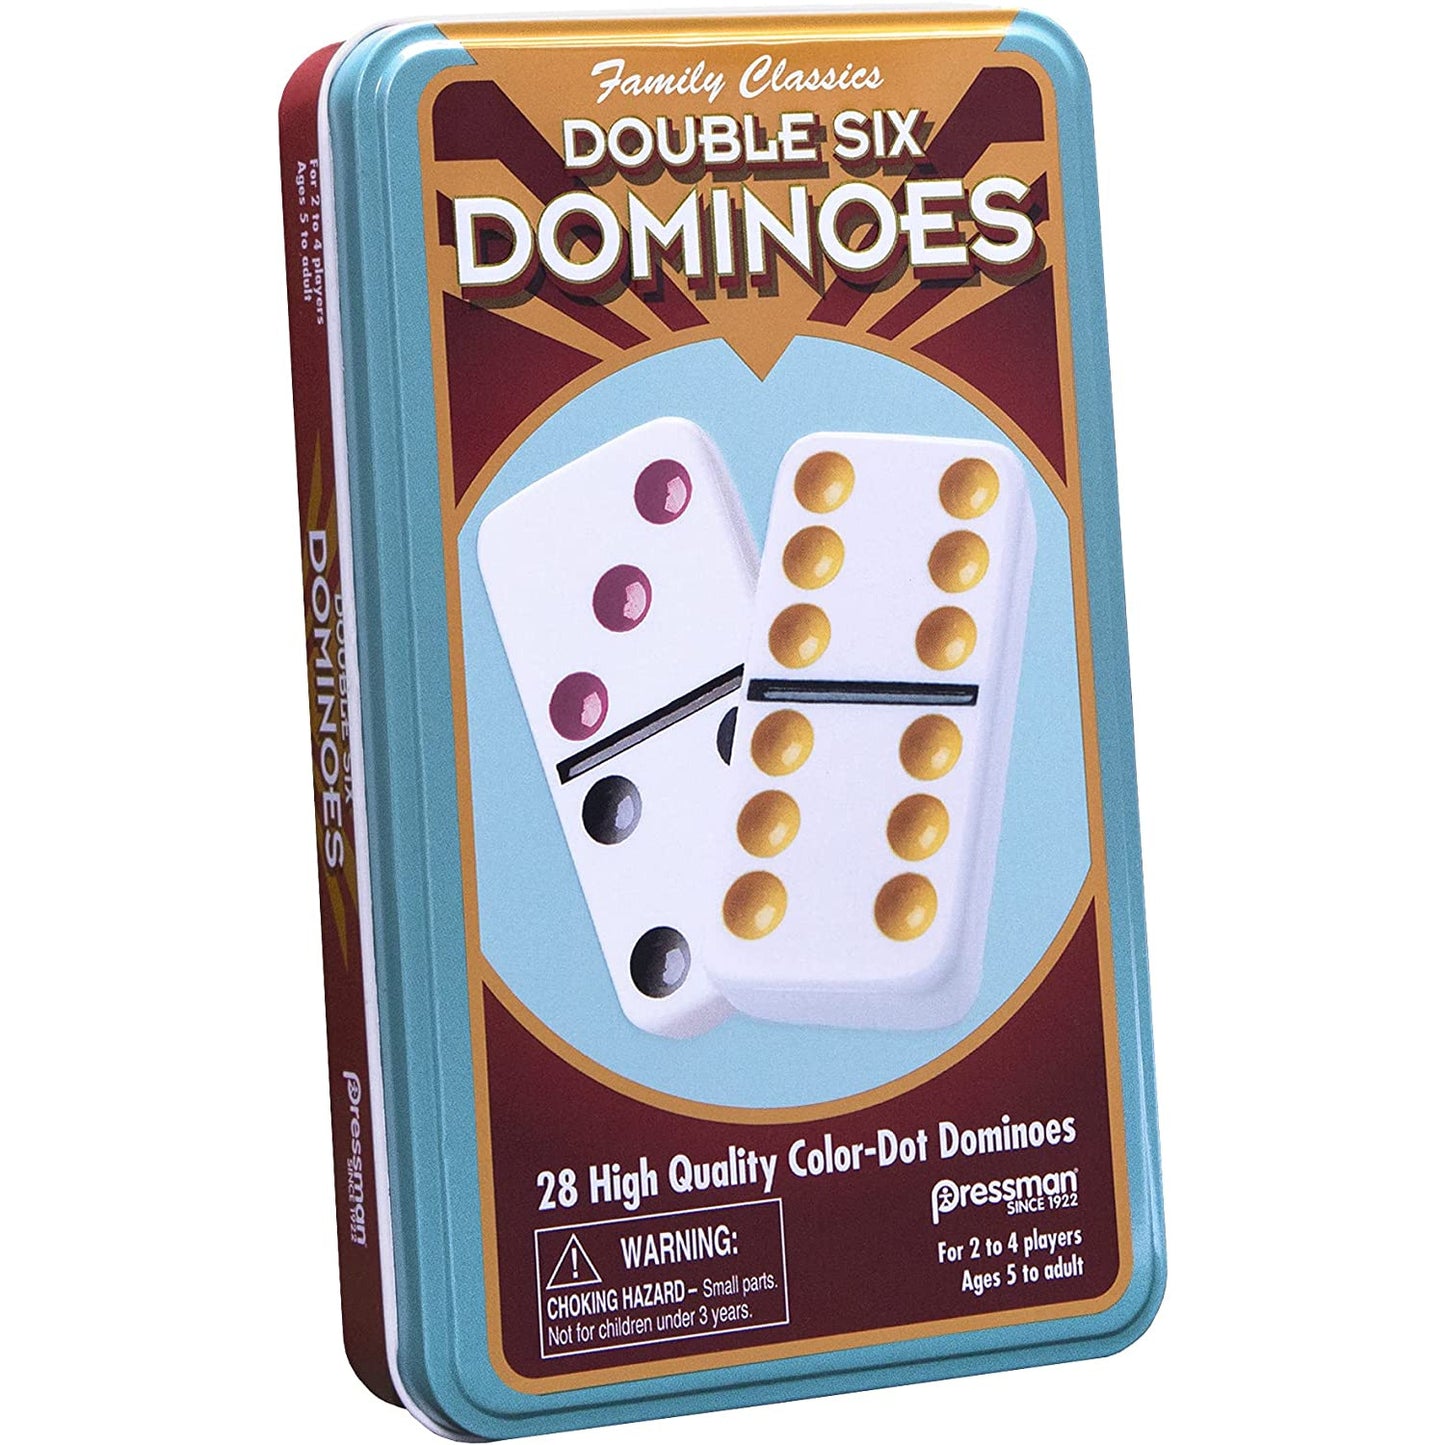 Double Six Dominoes